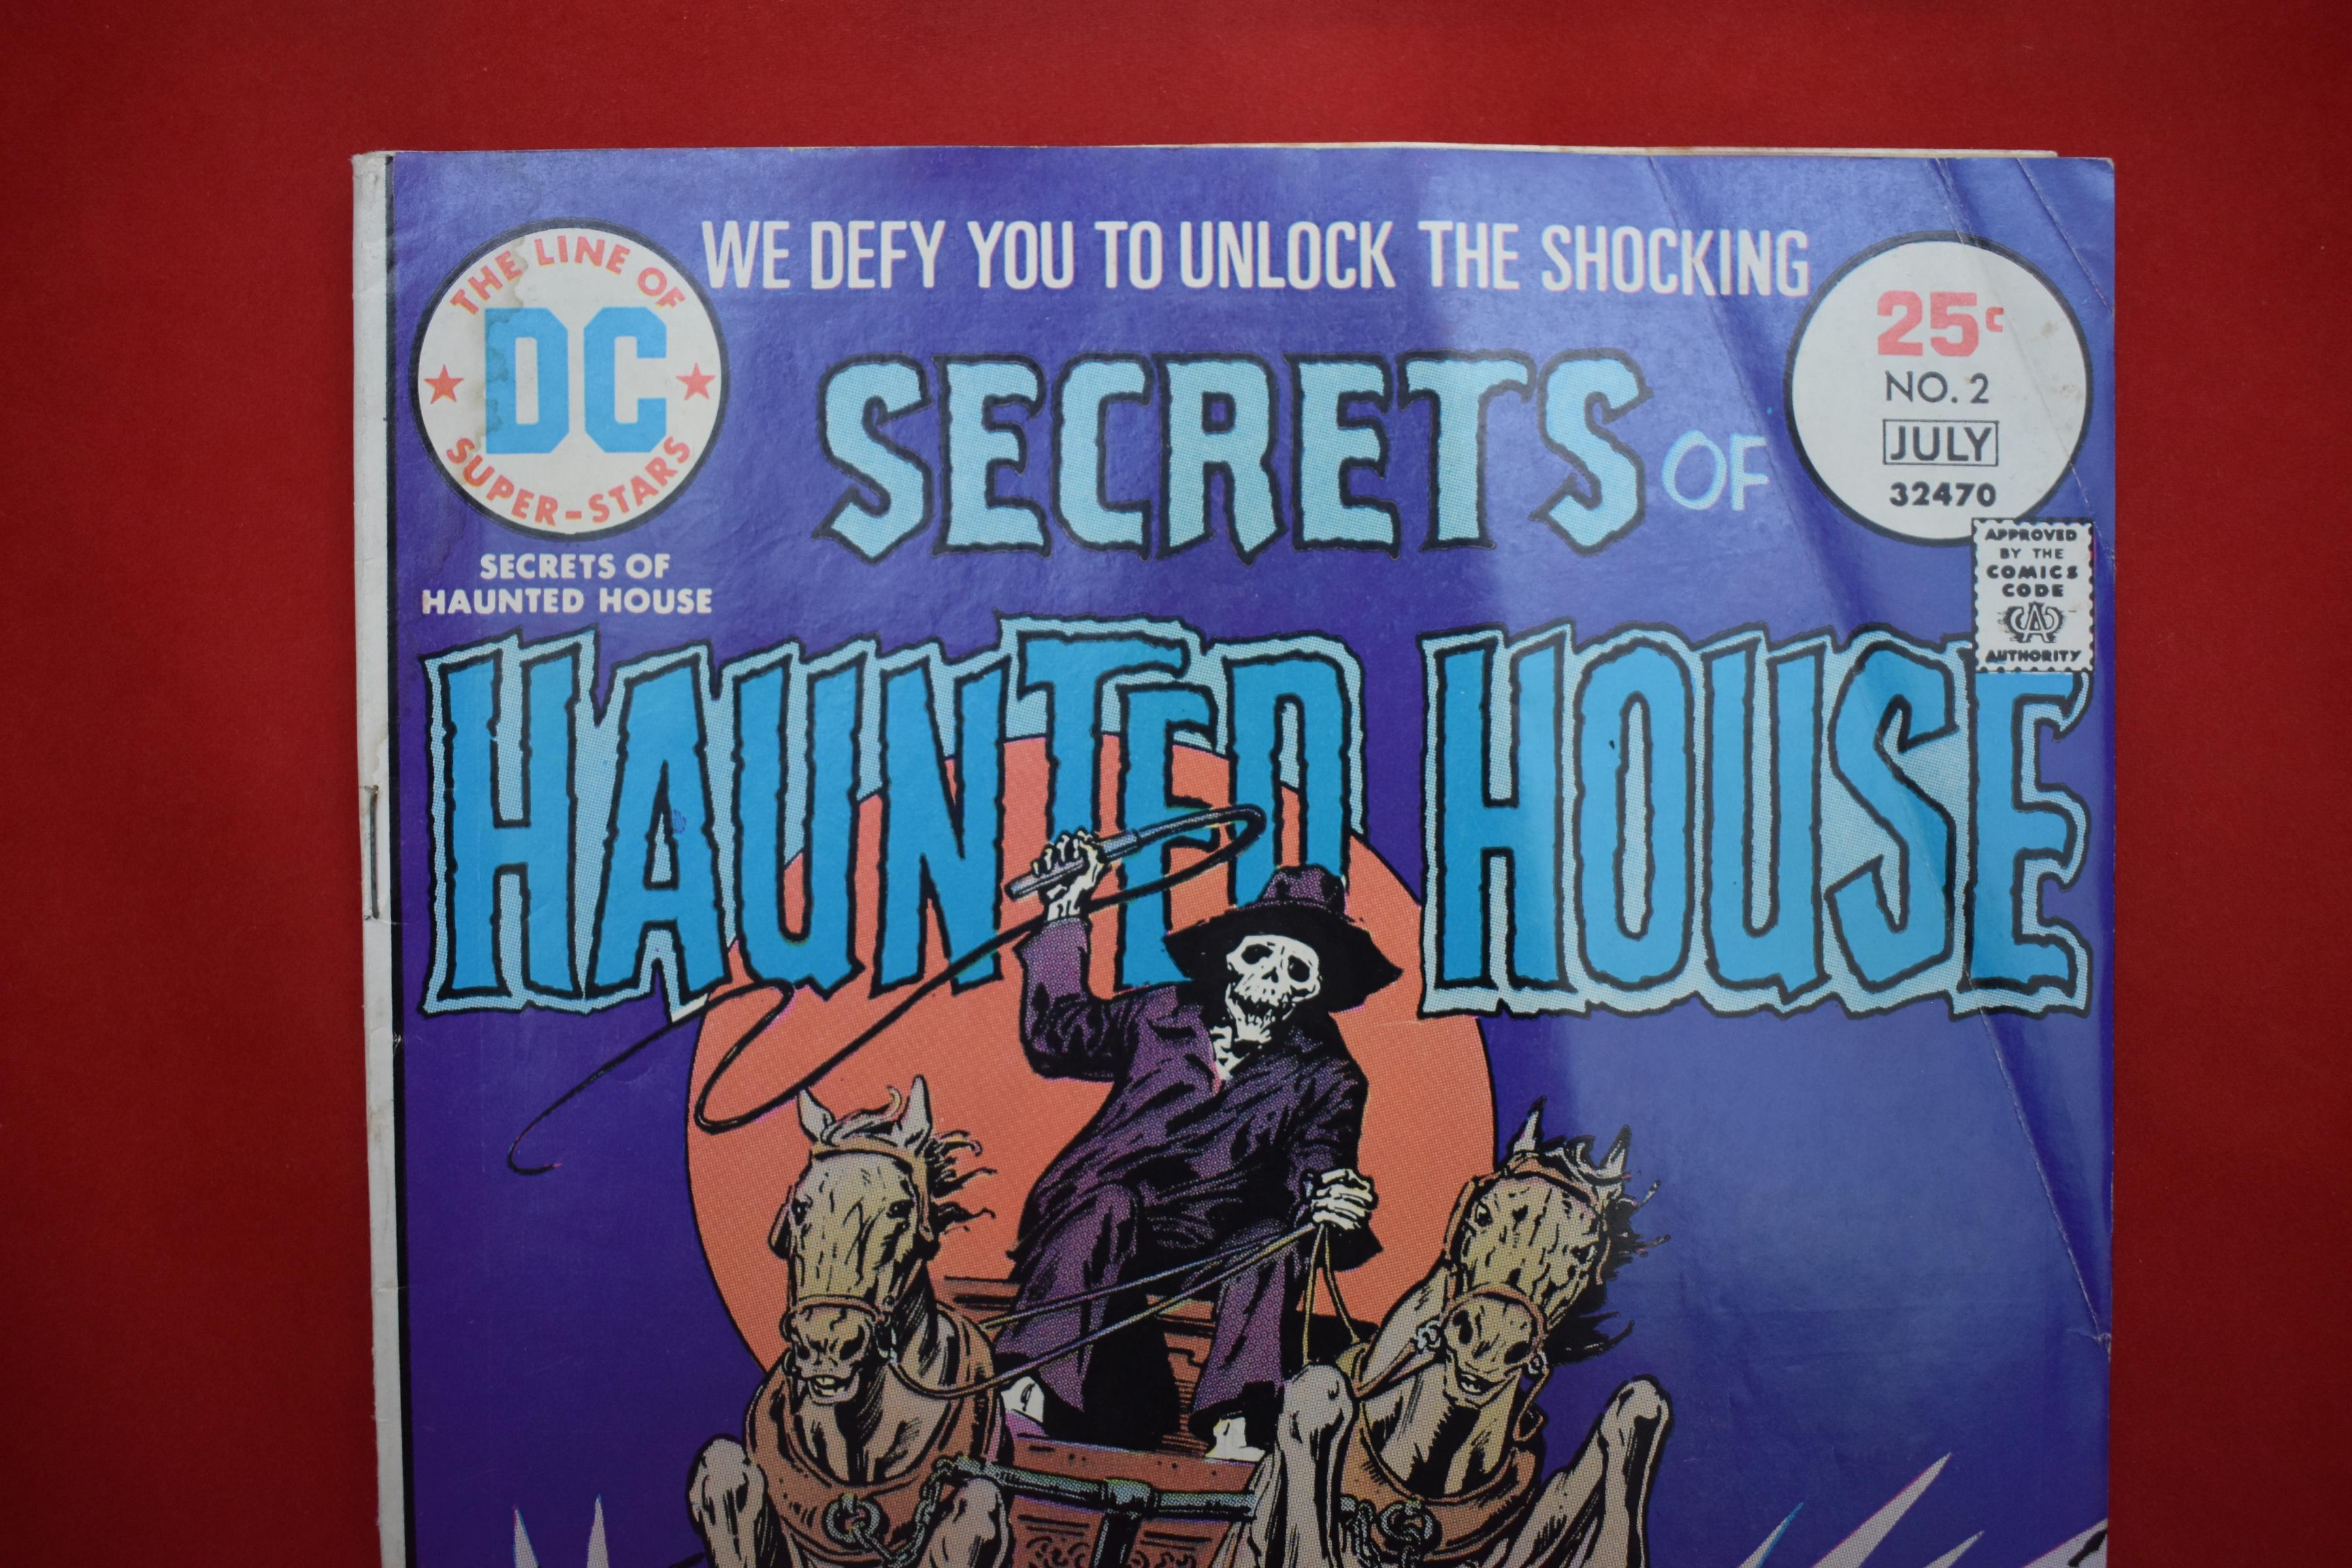 SECRETS OF HAUNTED HOUSE #2 | A DEAD MAN! | ERNIE CHAN - 1975 | *SOLID - CREASING*